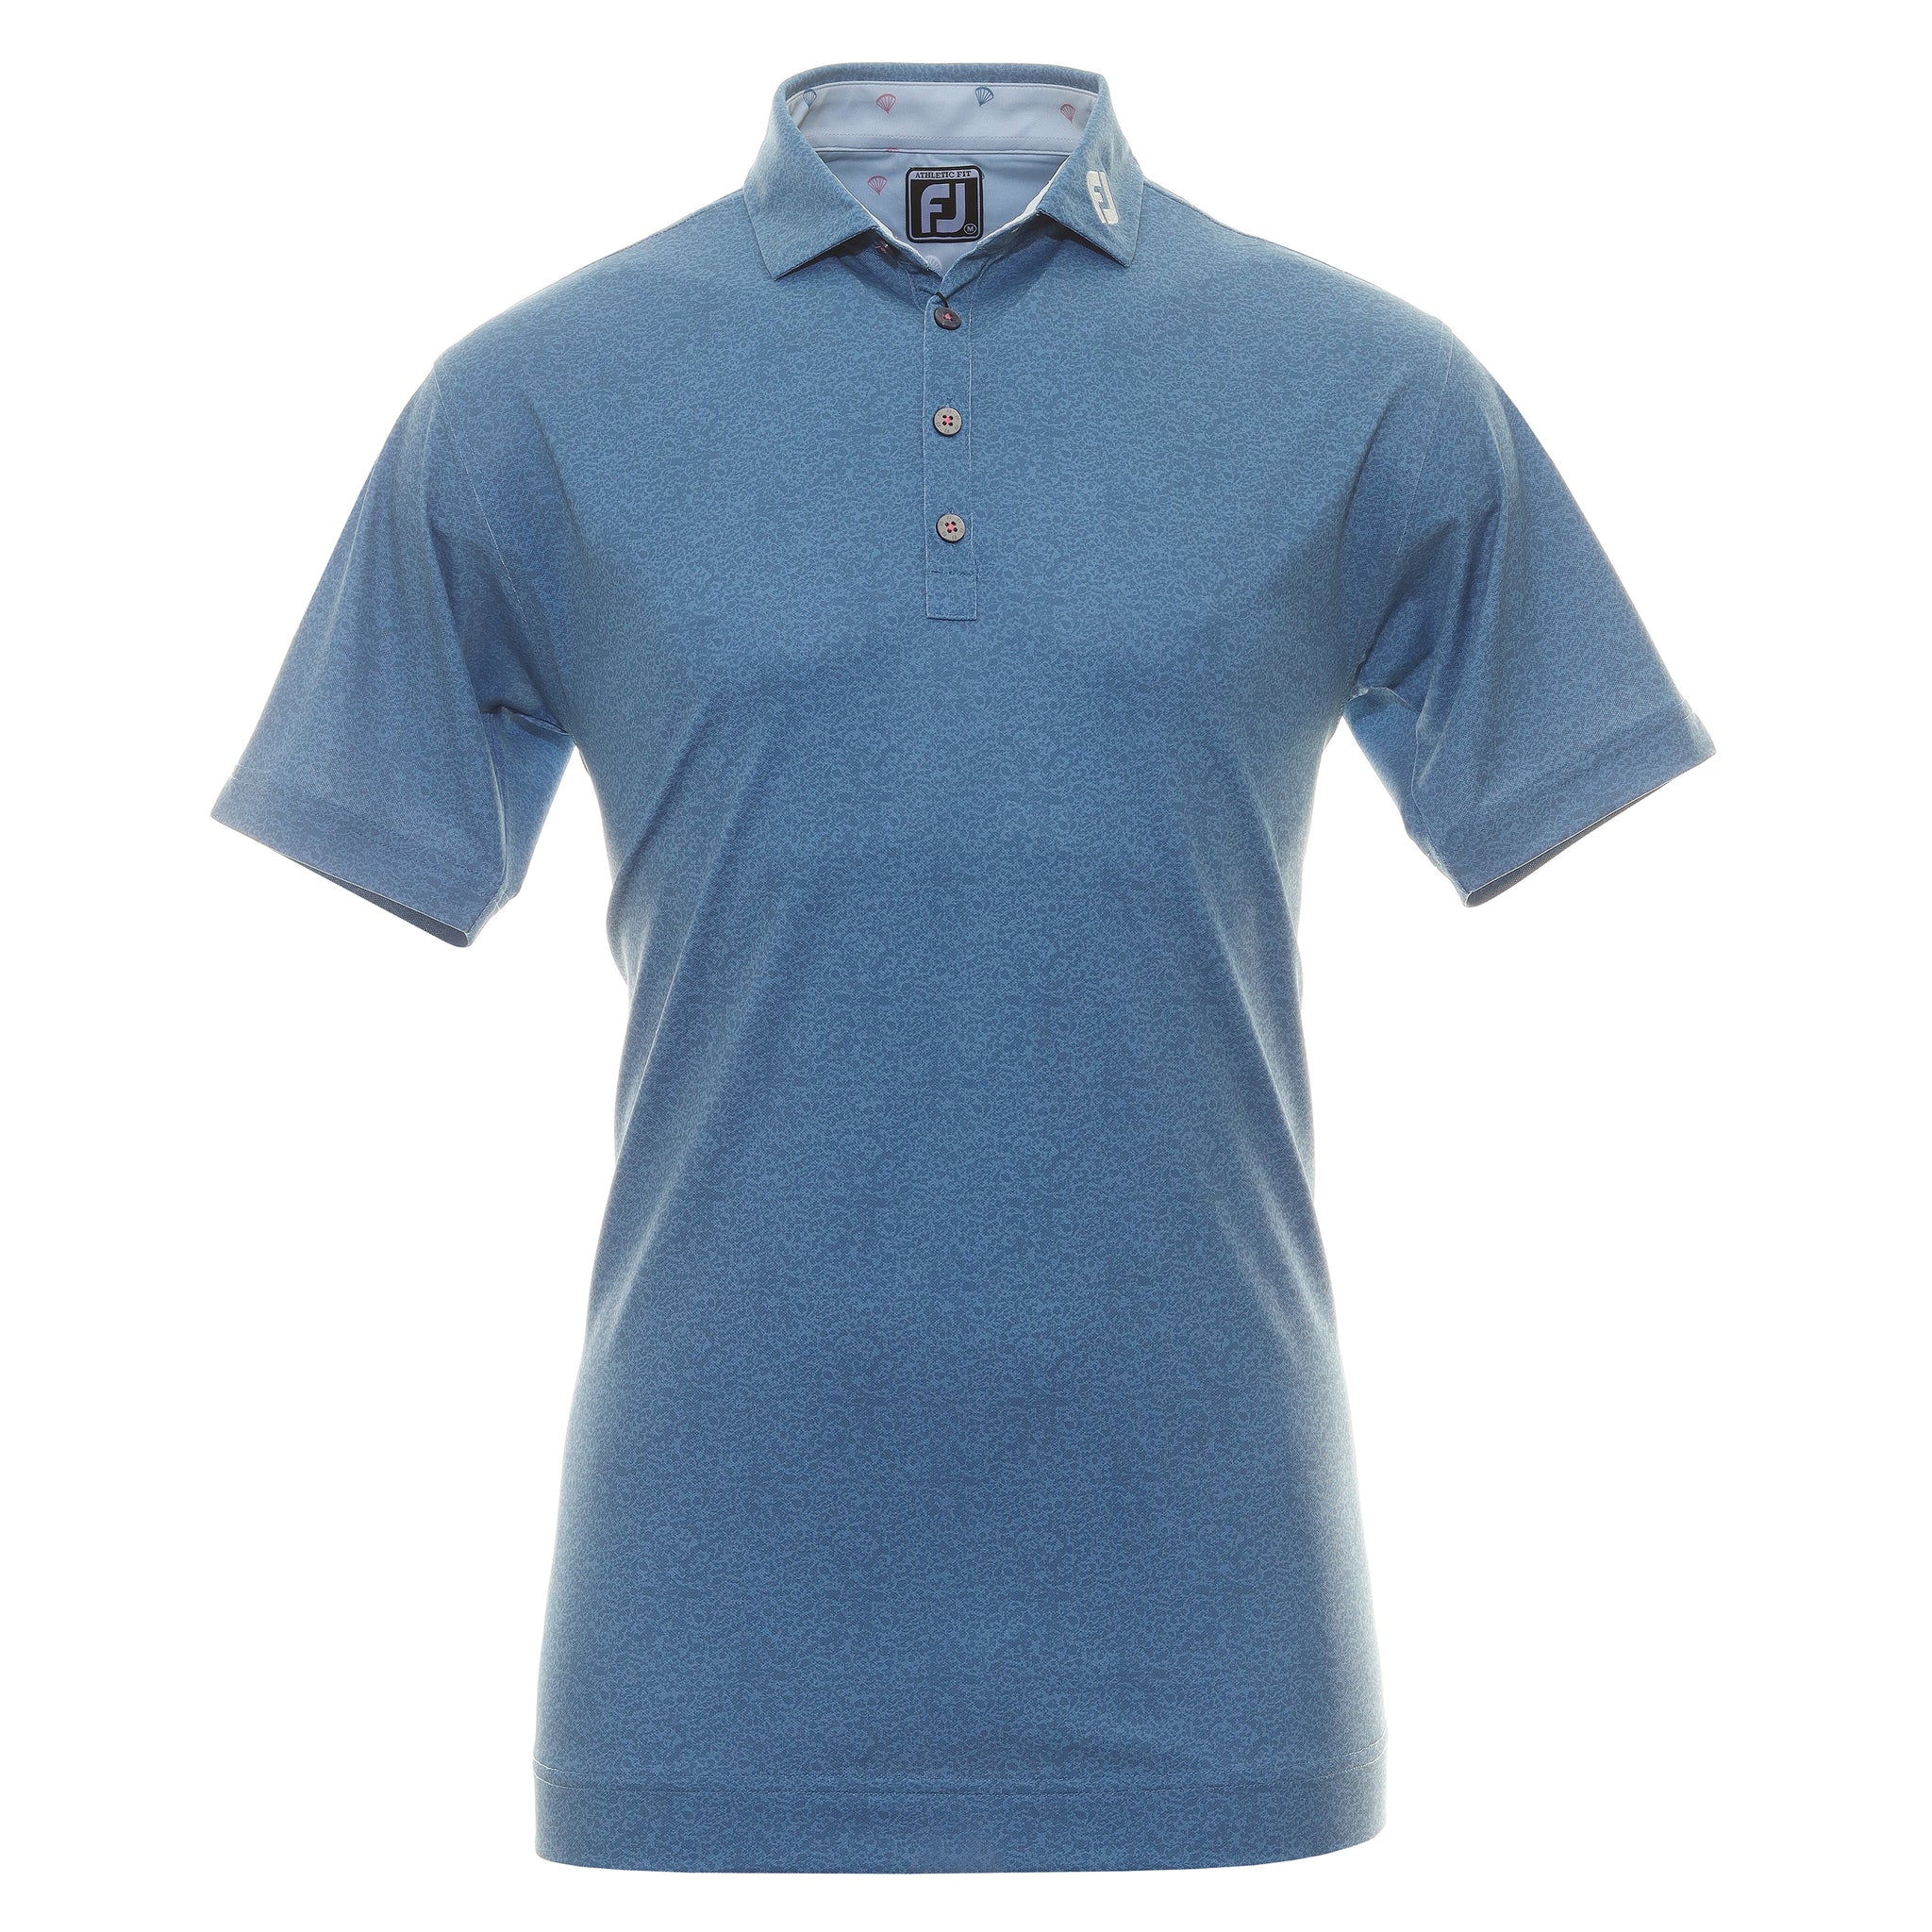 FootJoy Texture Print Pique Golf Shirt 89895 Sapphire | Function18 ...